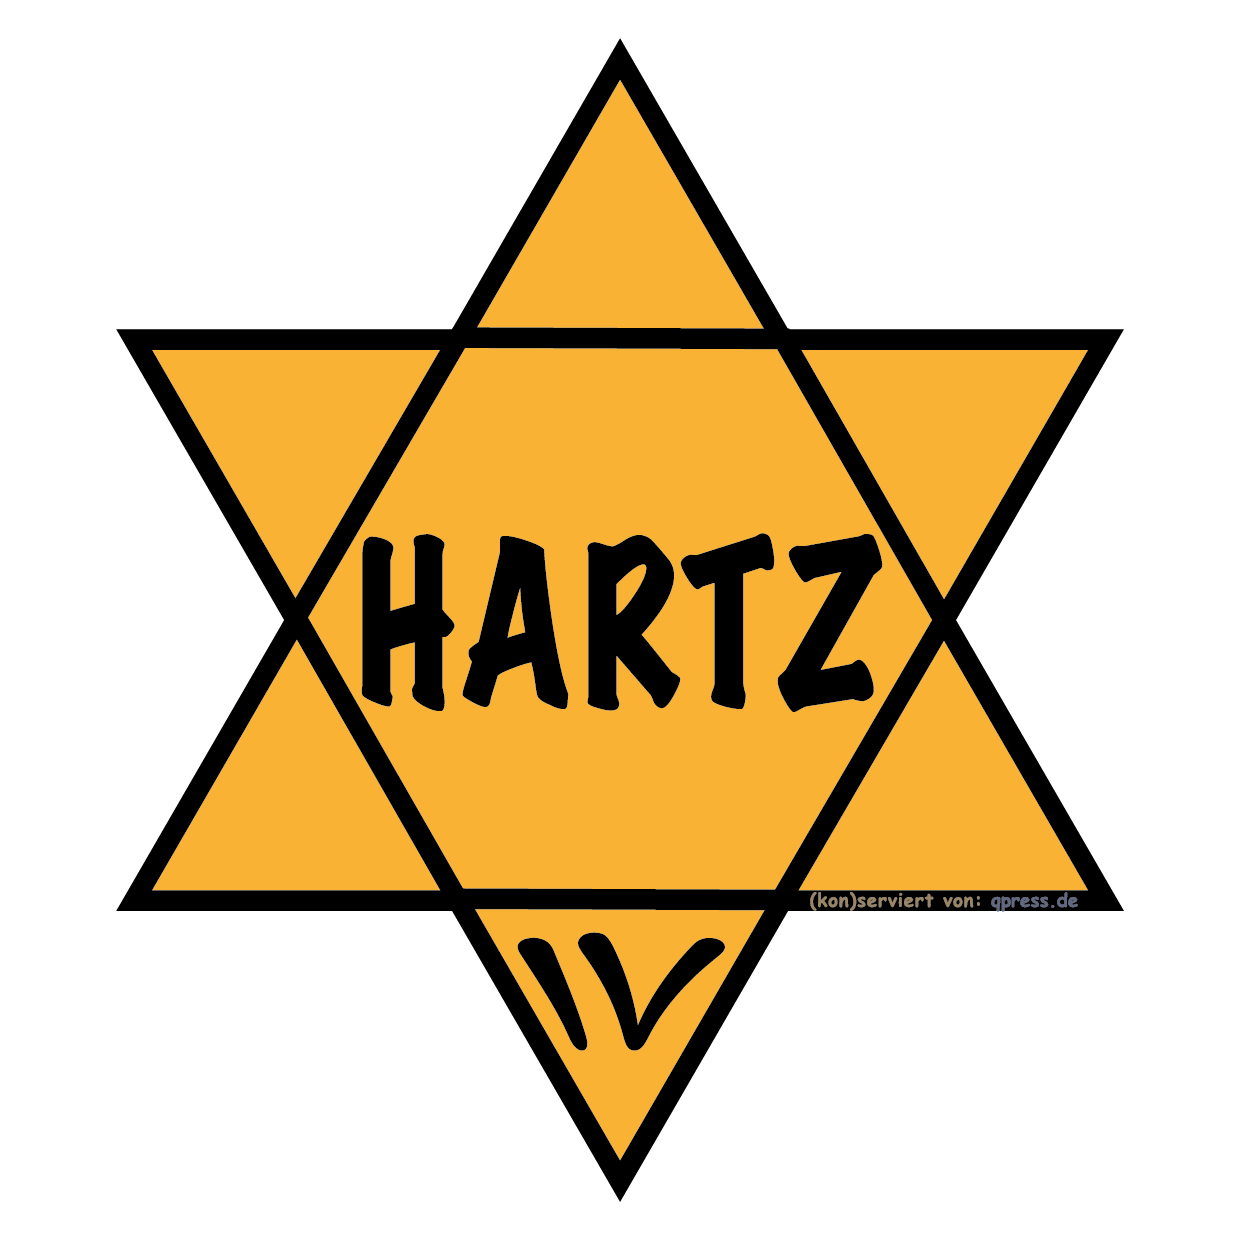 Happy Hartz IV Kollektion Stigma Branding qpress 2013